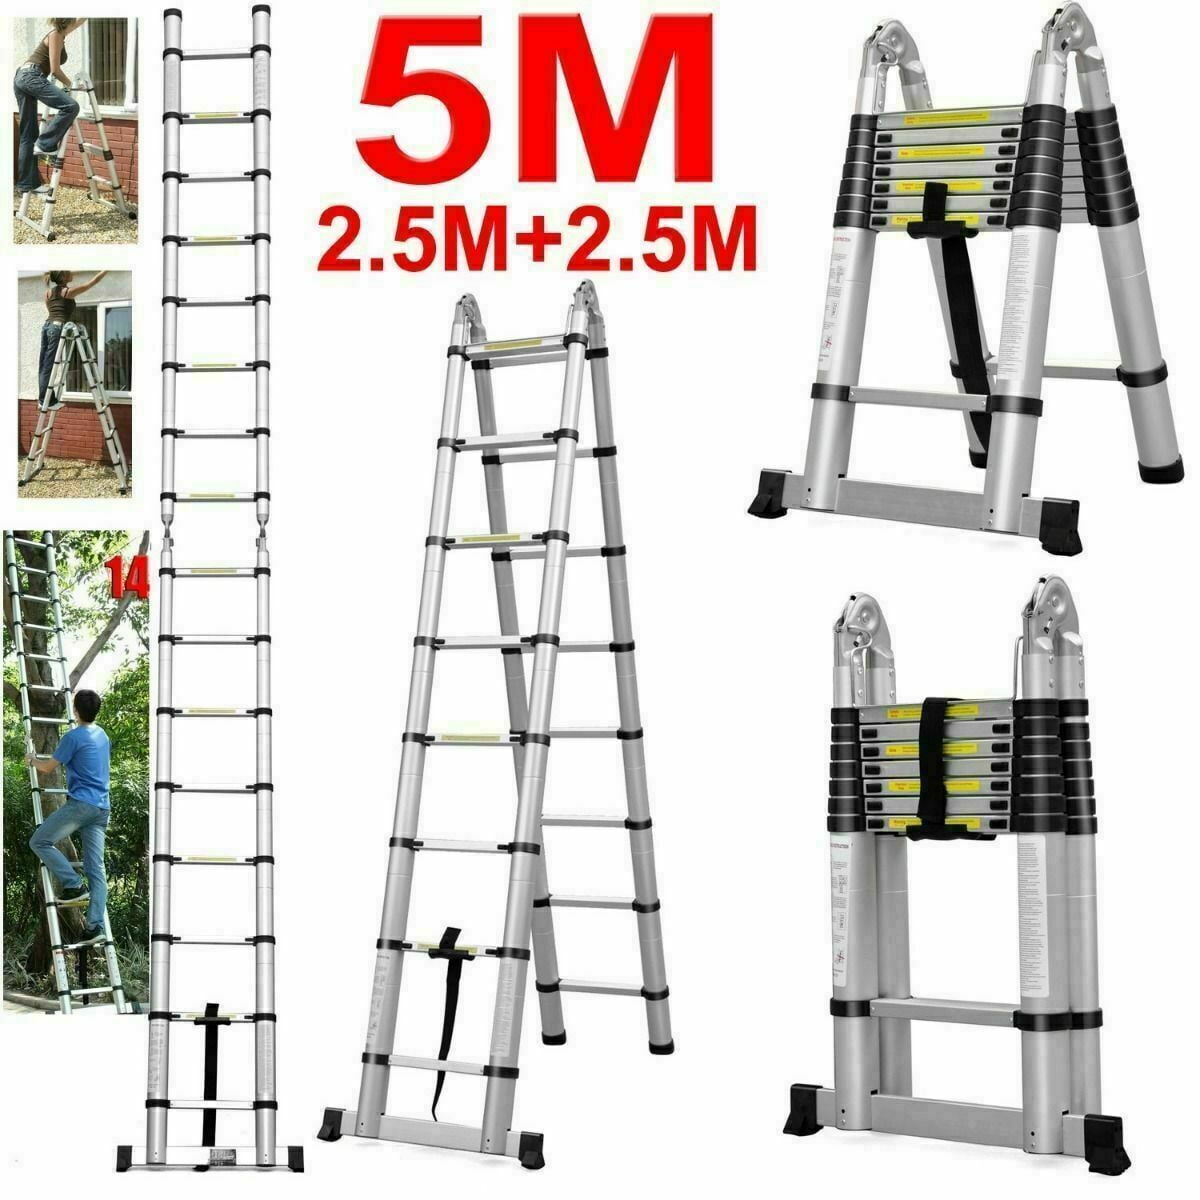 3.8M Telescopic Ladder Multi-Purpose Aluminium Telescoping Ladder Extension Extend Portable Ladder Foldable Ladder EN131 Standards with Carry Bag 